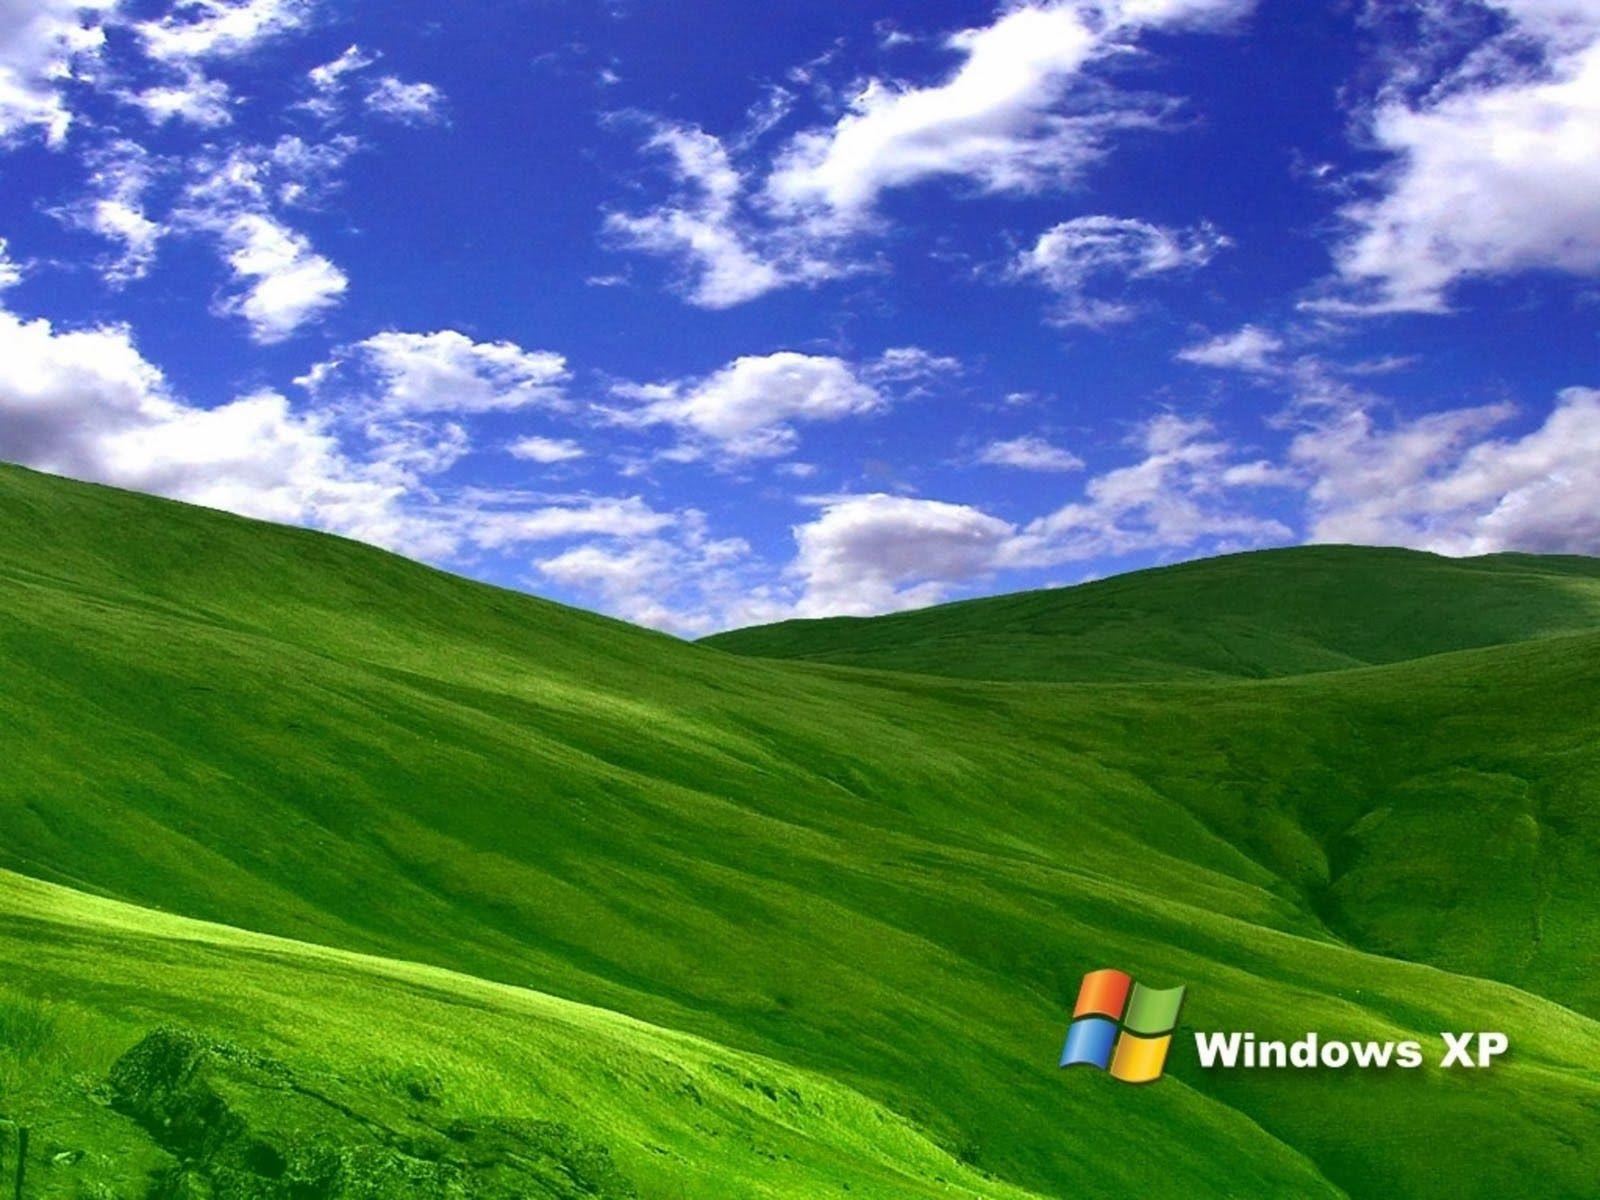 Windows Xp Desktop Background amxxcs How to Restore the Original